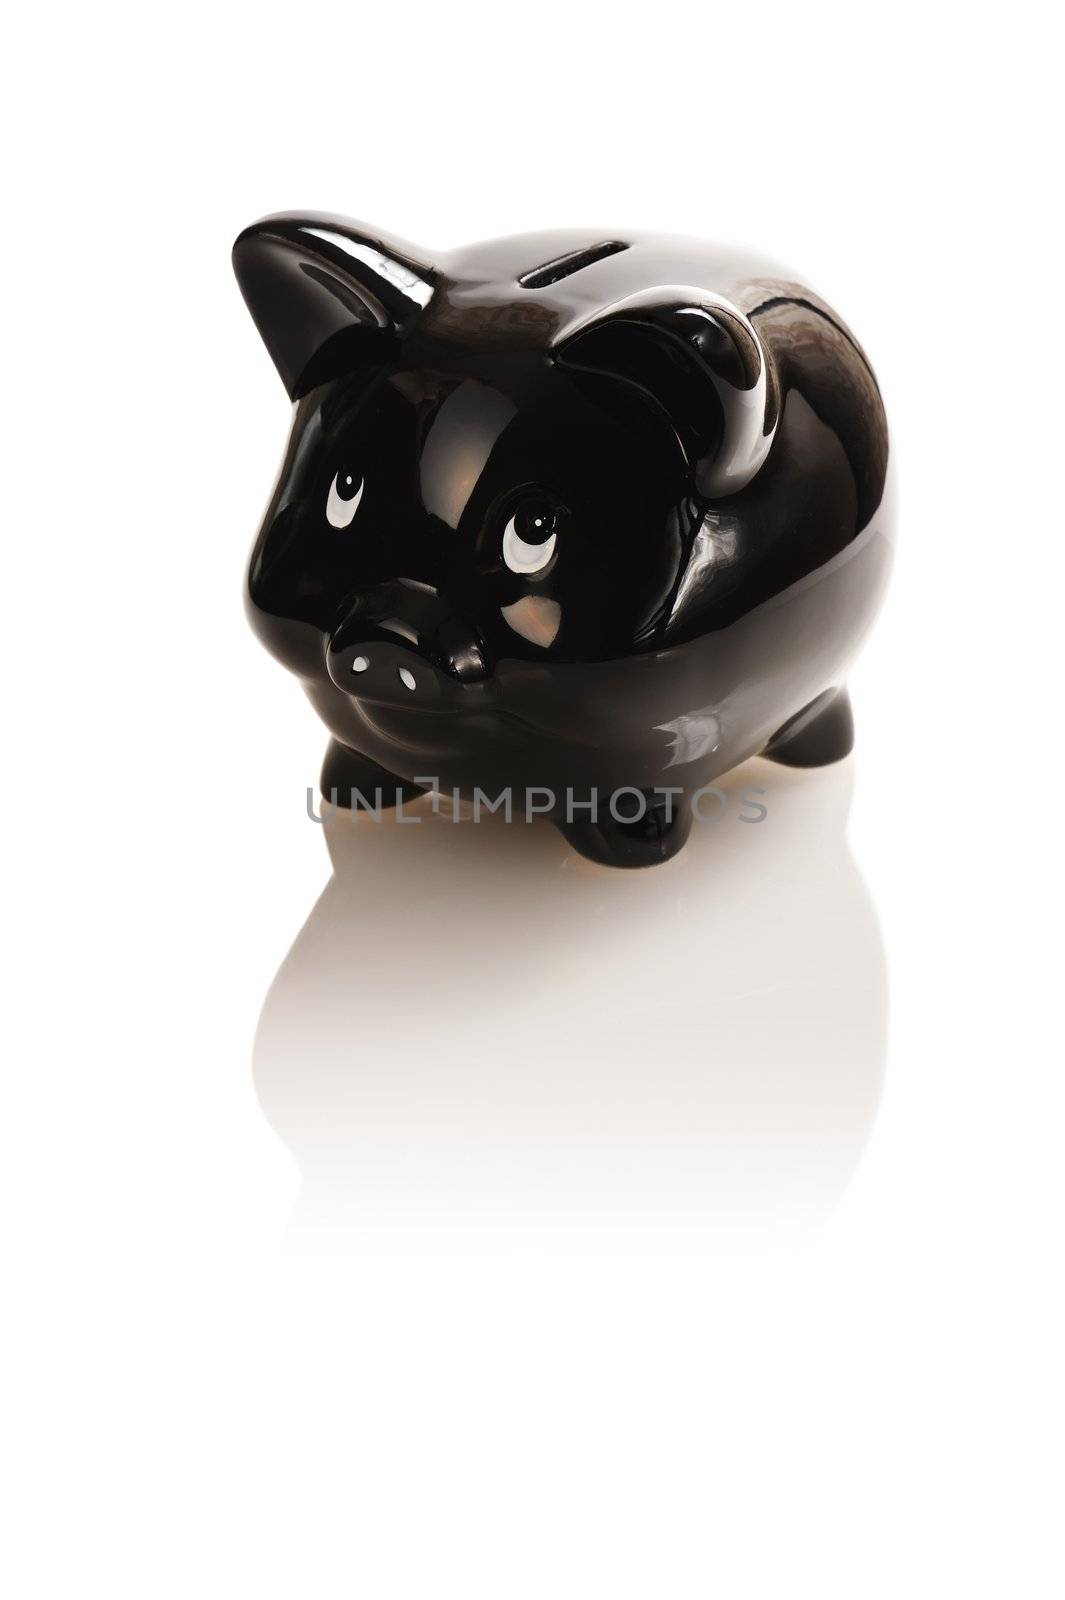 Black piggy bank by haveseen